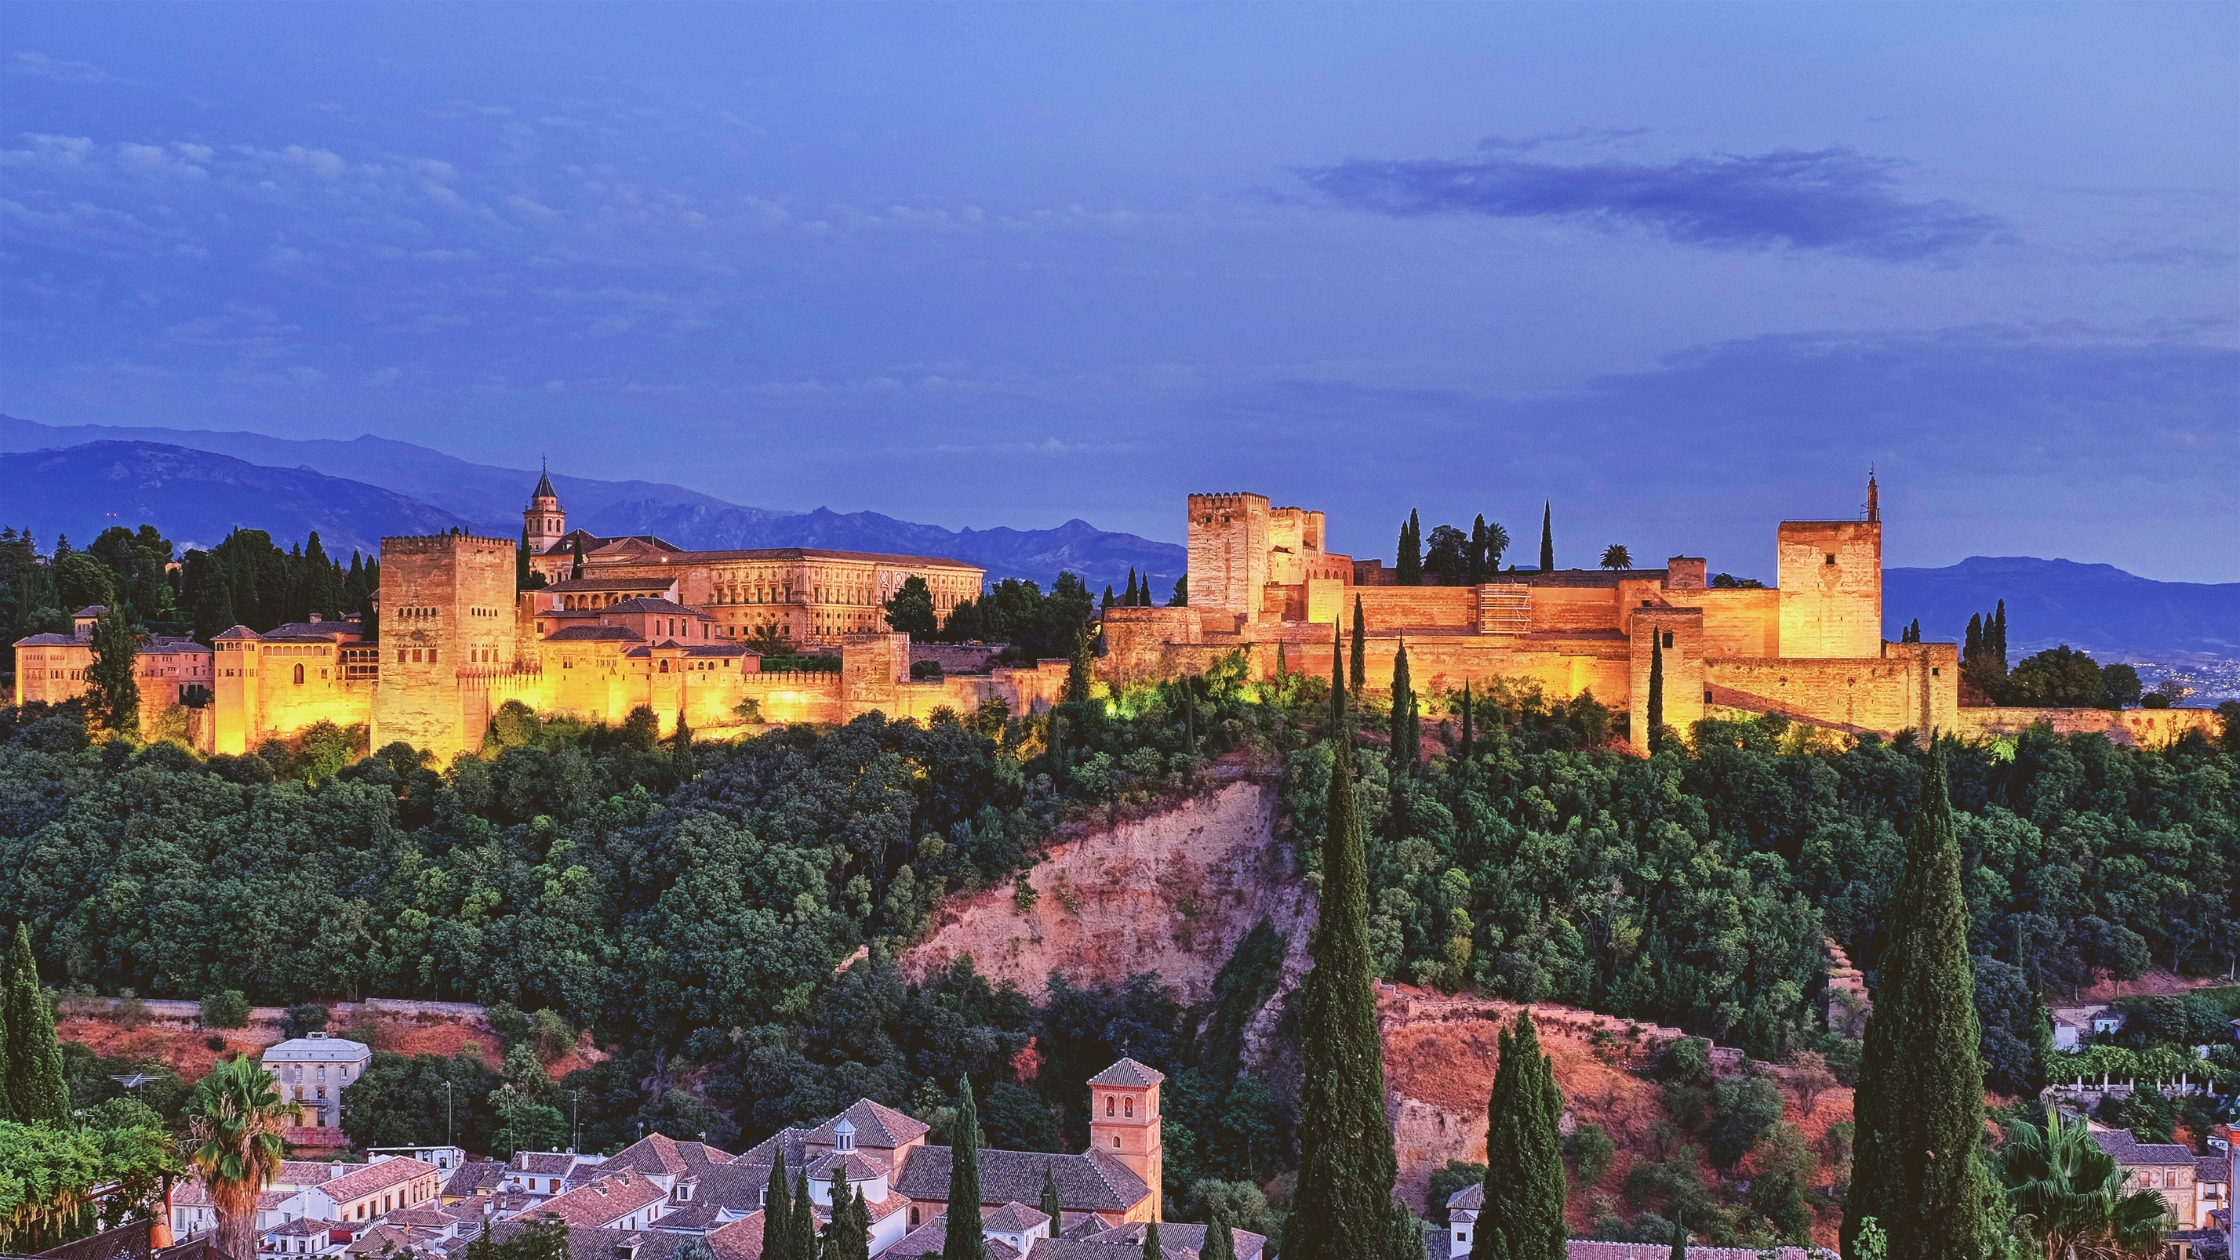 Alhambra's Influence on Islamic Art and European Heritage